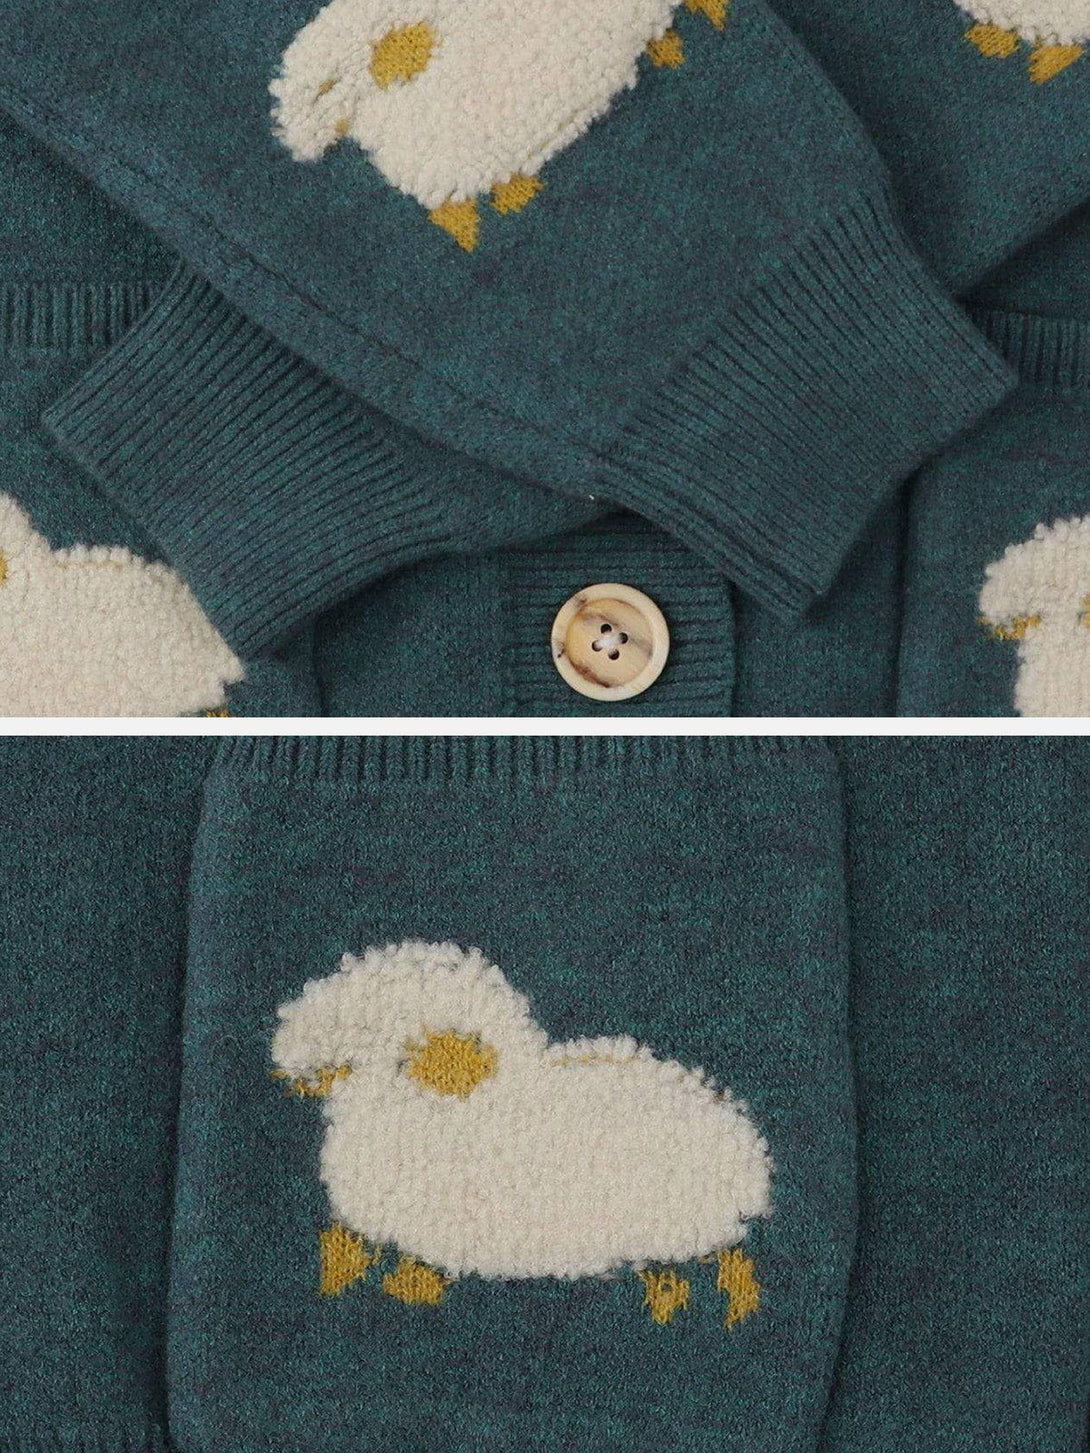 Majesda® - Little Lamb Knit Cardigan outfit ideas streetwear fashion